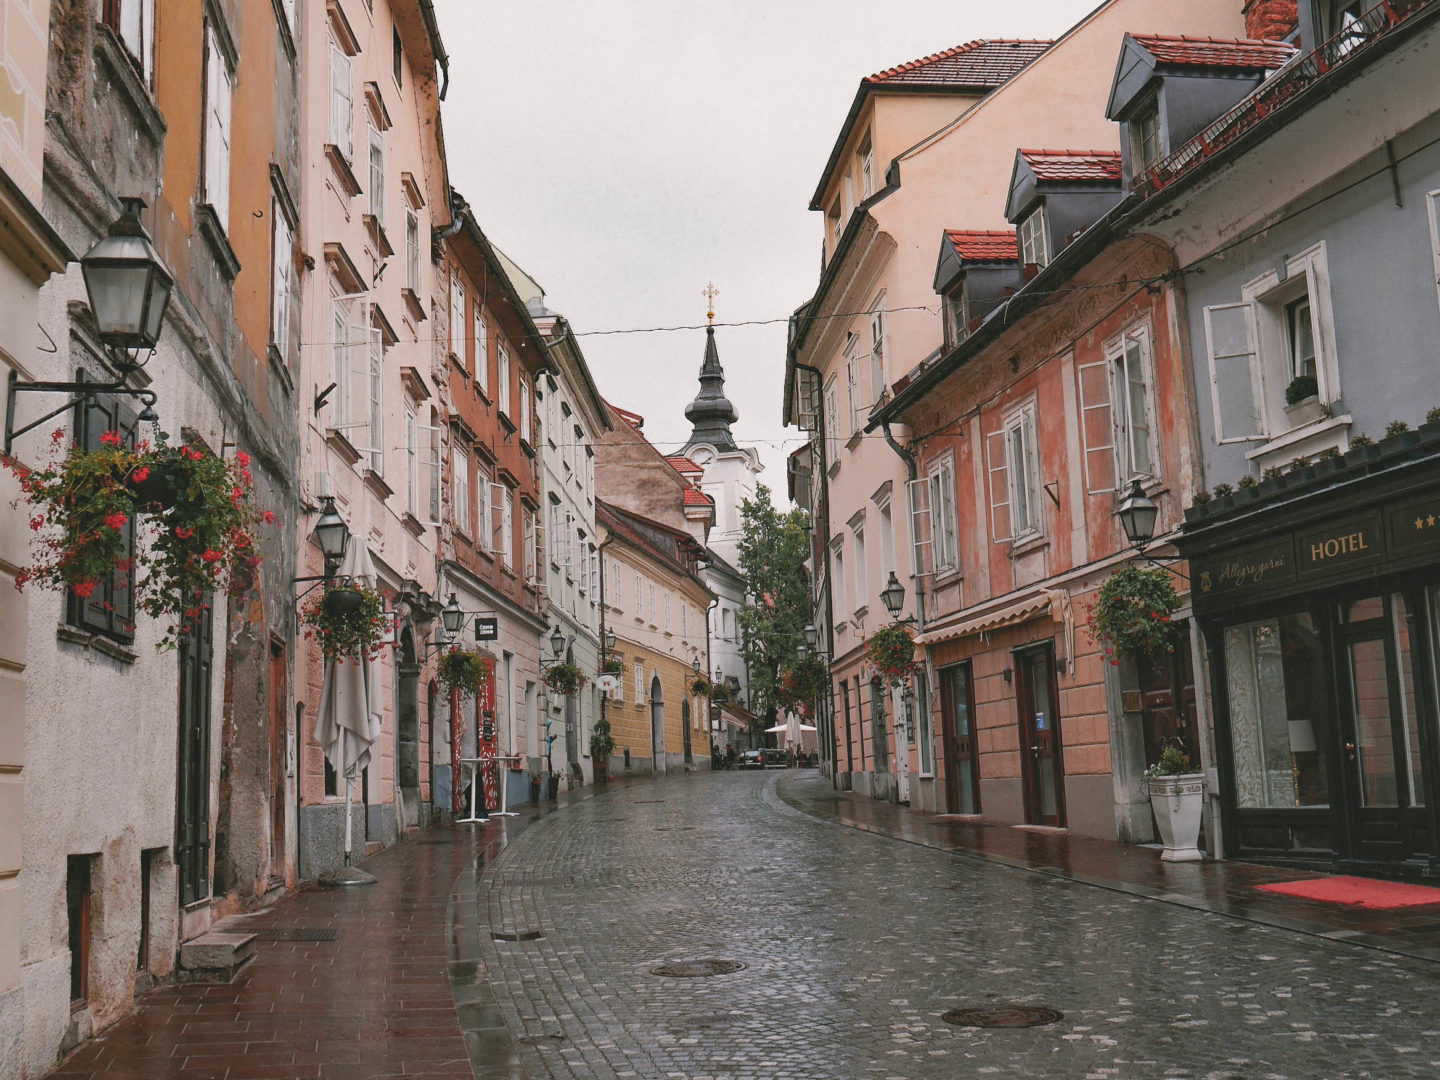 Ljubljana, Slovenia - The beginnings of a Slovenian Love Affair